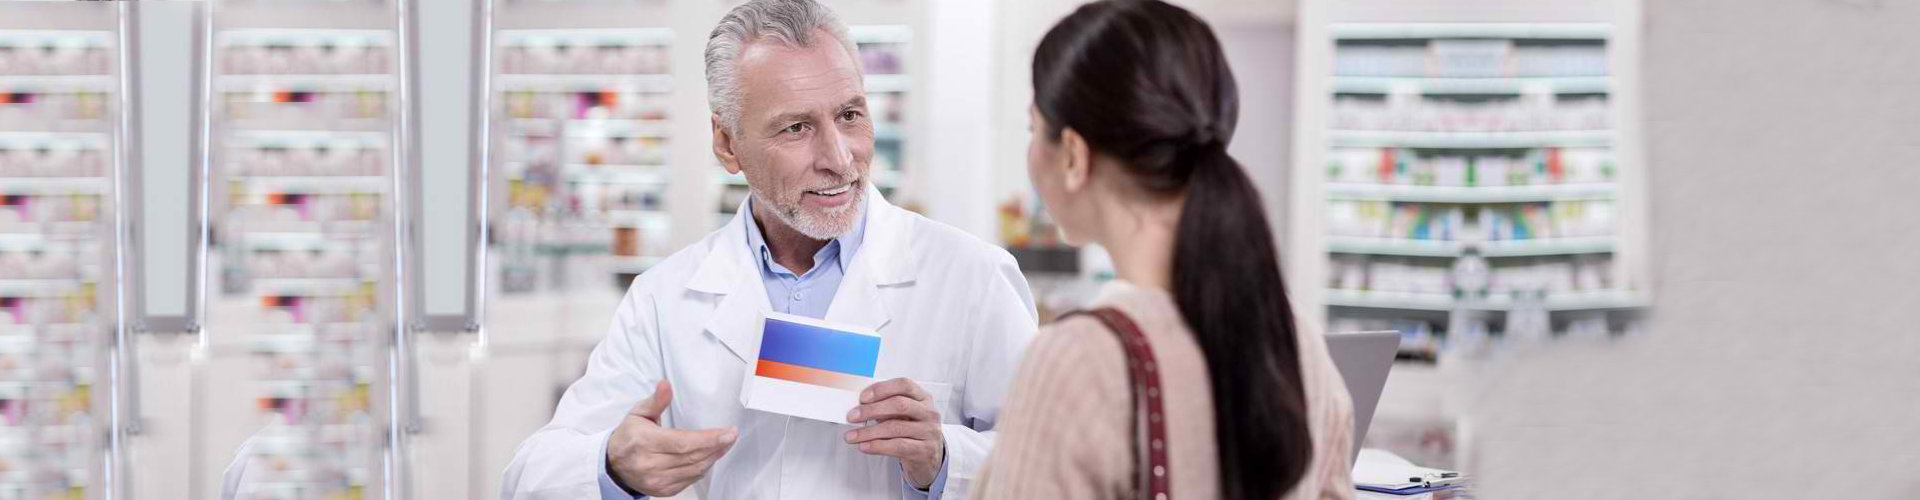 image of customer and the pharmacist explaining the medecine